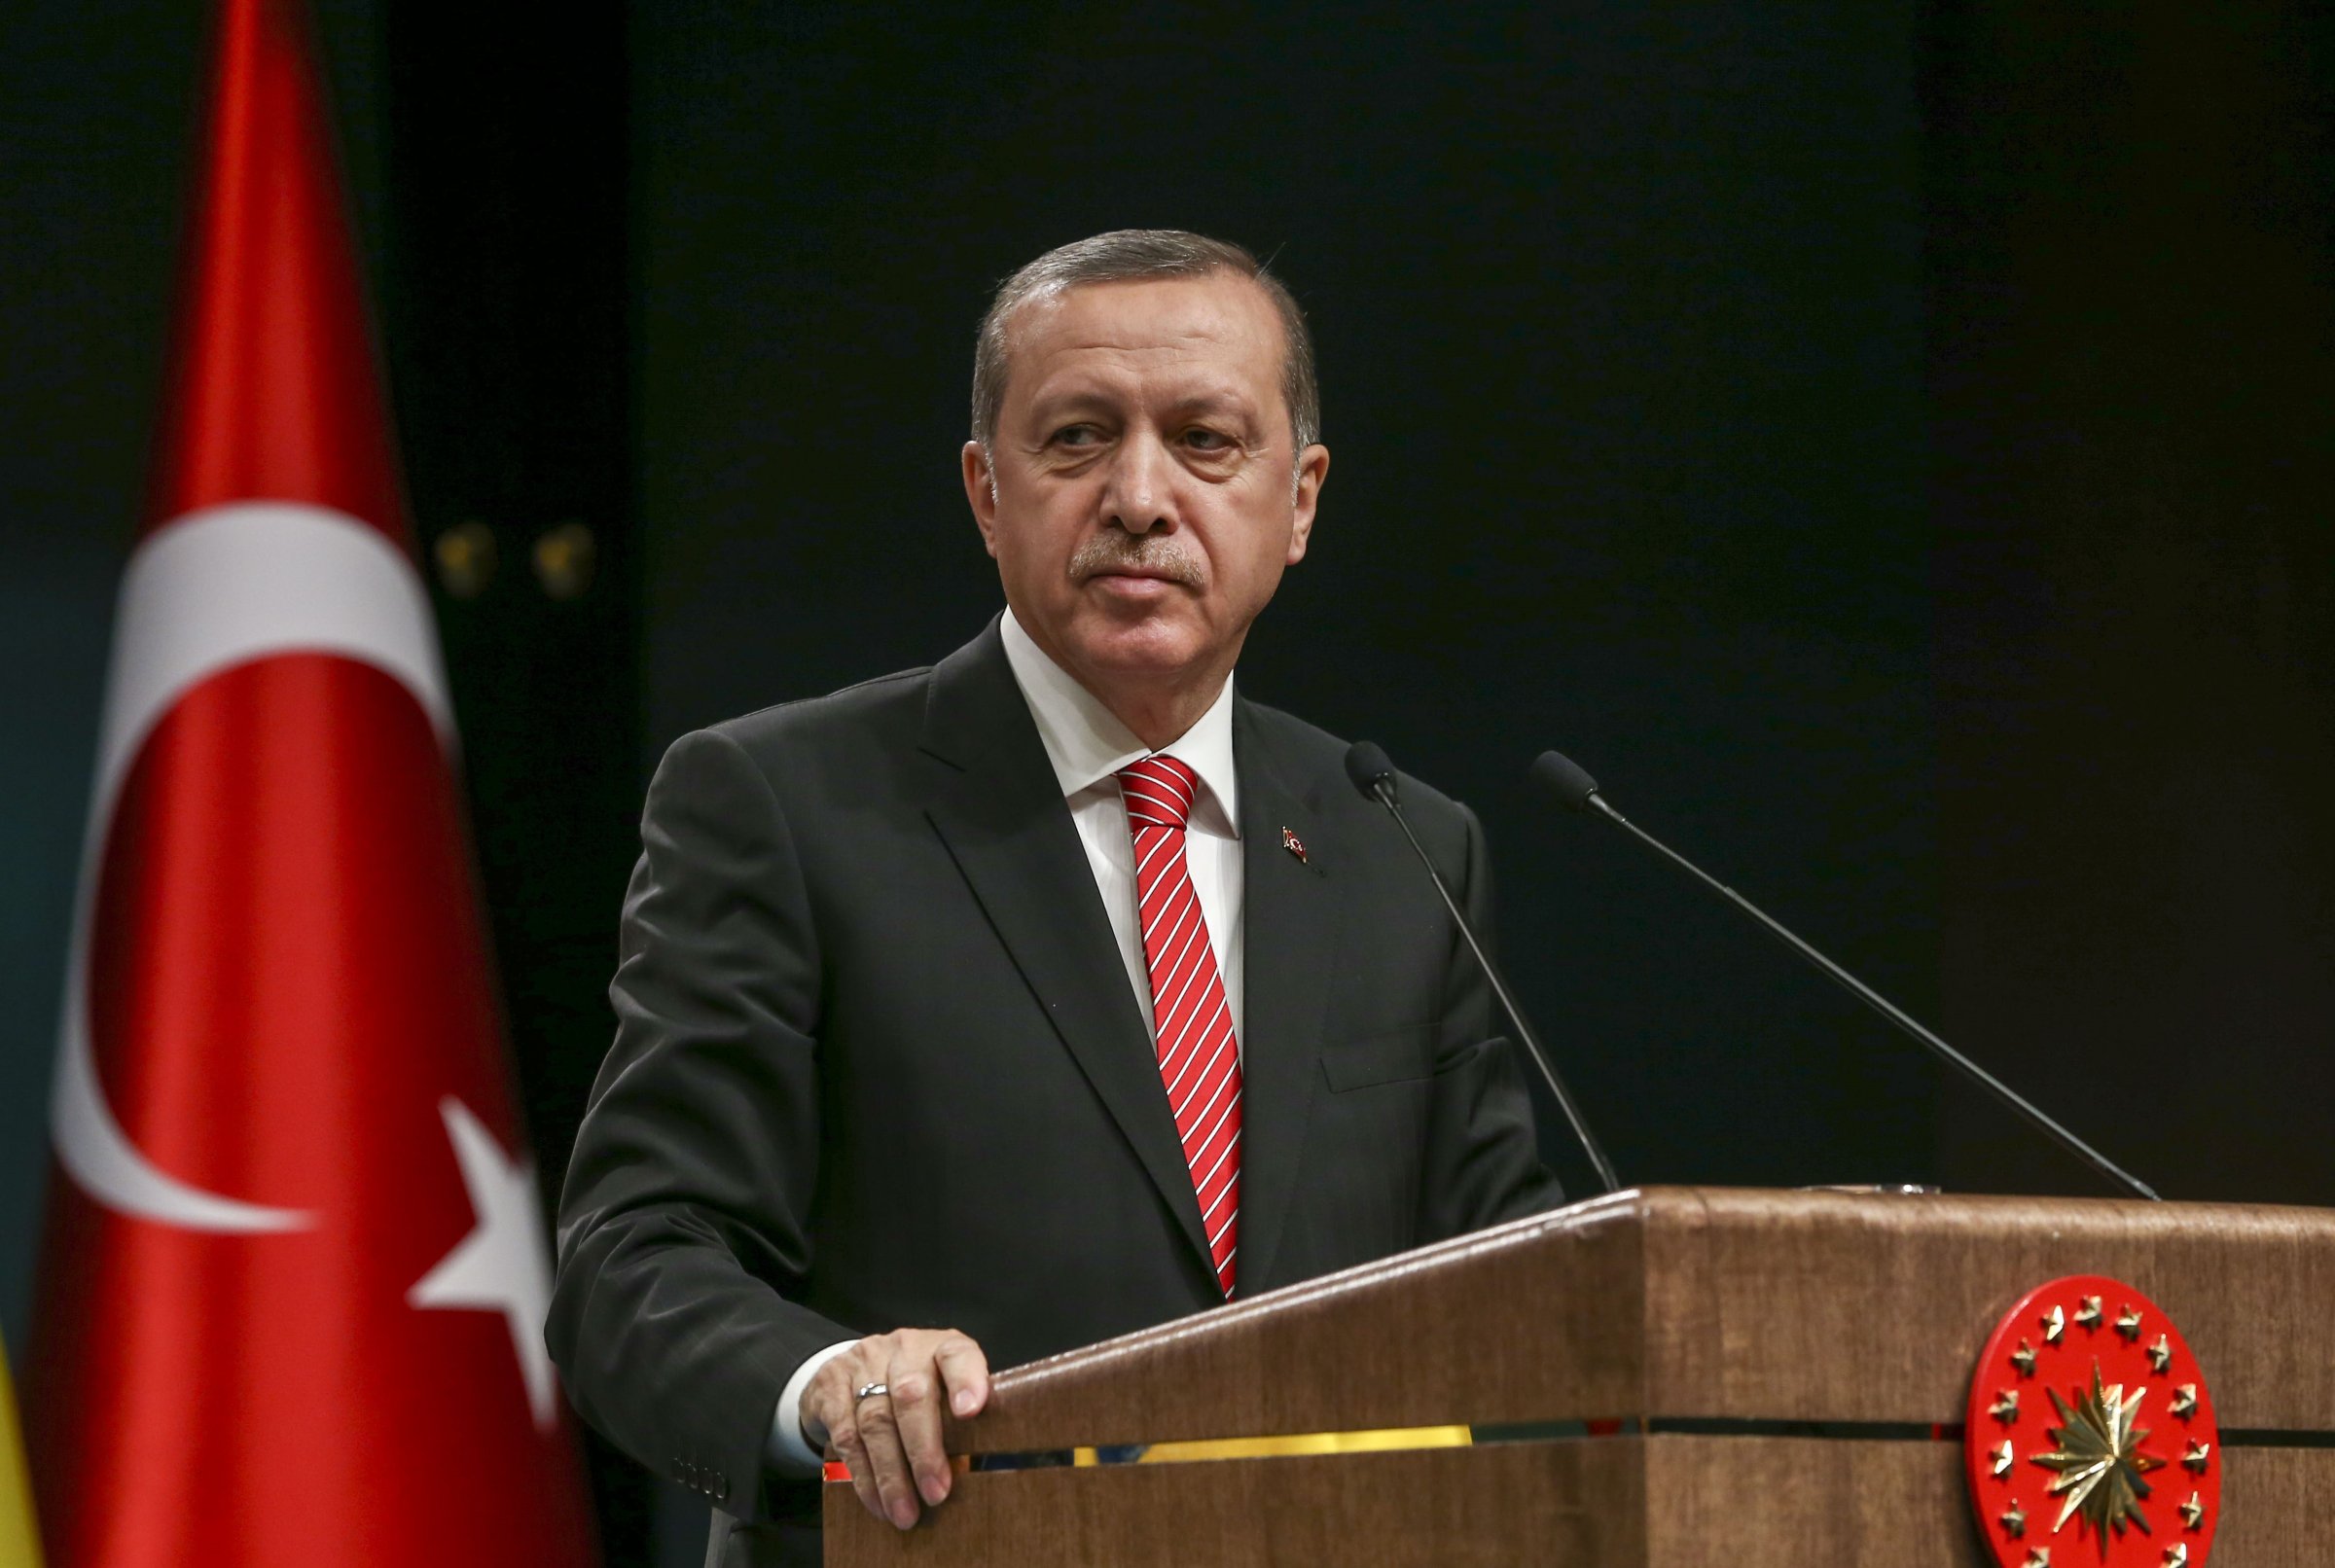 President of Turkey Recep Tayyip Erdogan at a press conference after the 5th Turkey-Ukraine High Level Strategic Council Meeting in Ankara, Turkey on March 9, 2016.